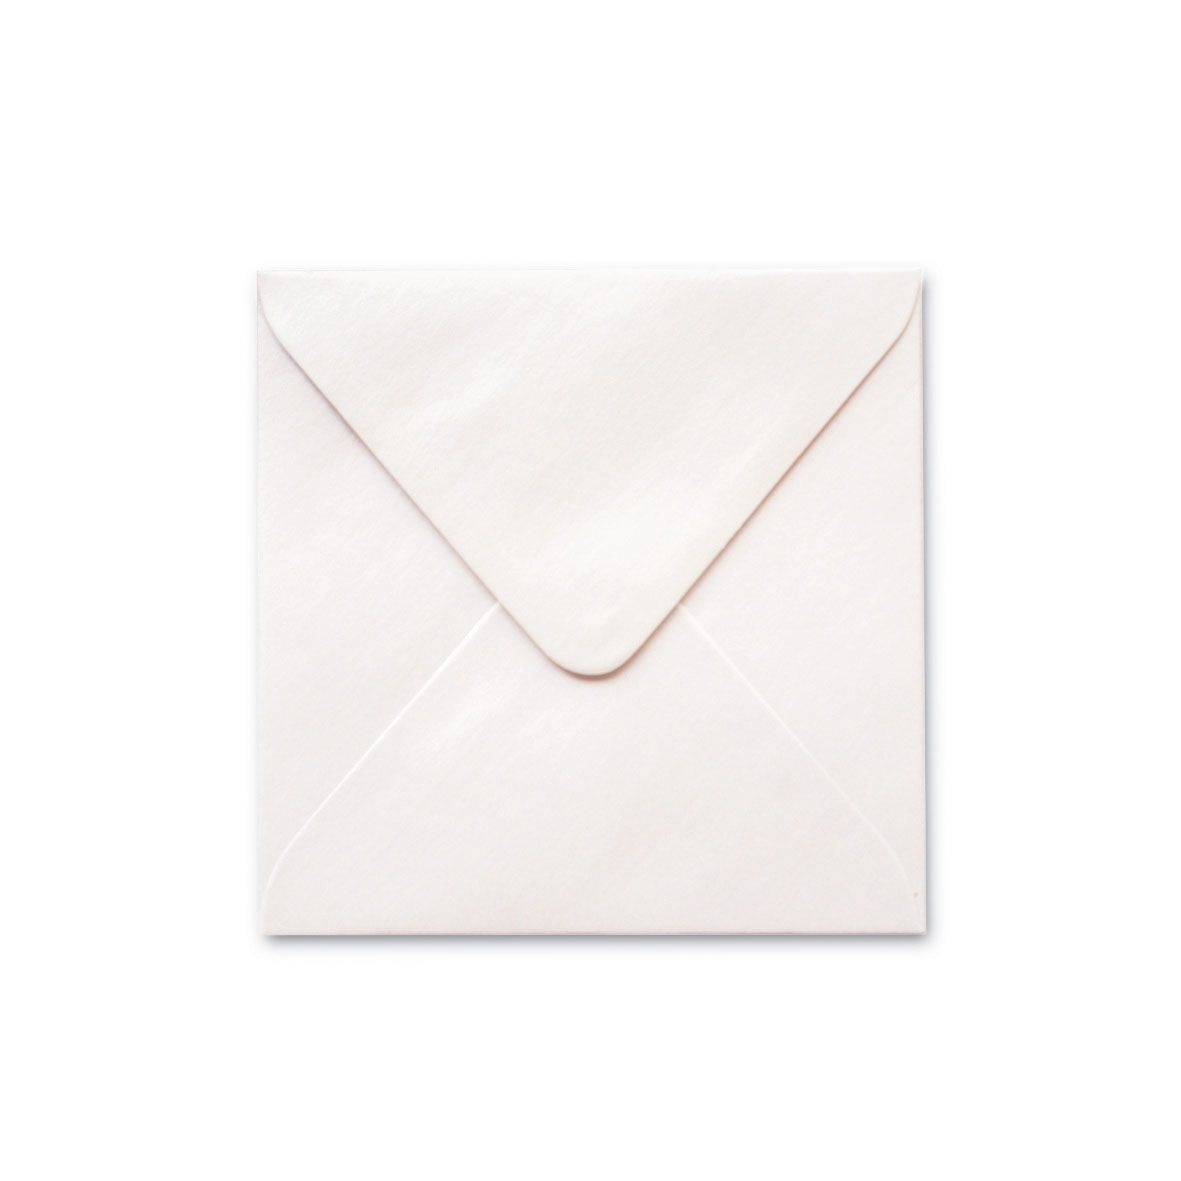 150mm Square Champagne Shimmer Envelope